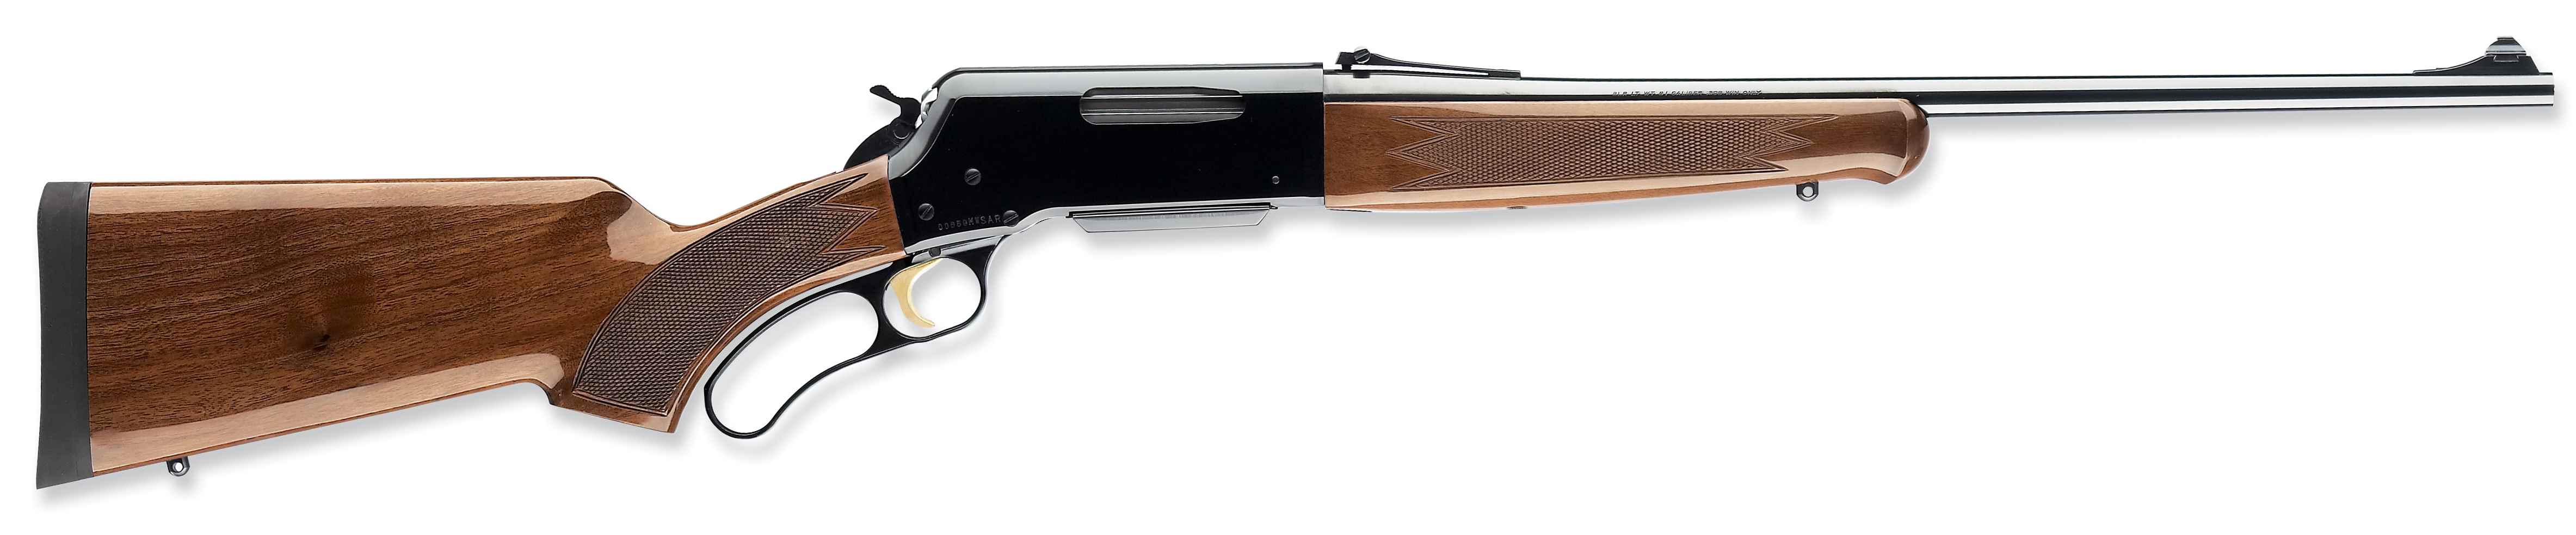 Browning BLR LW Pistol Grip